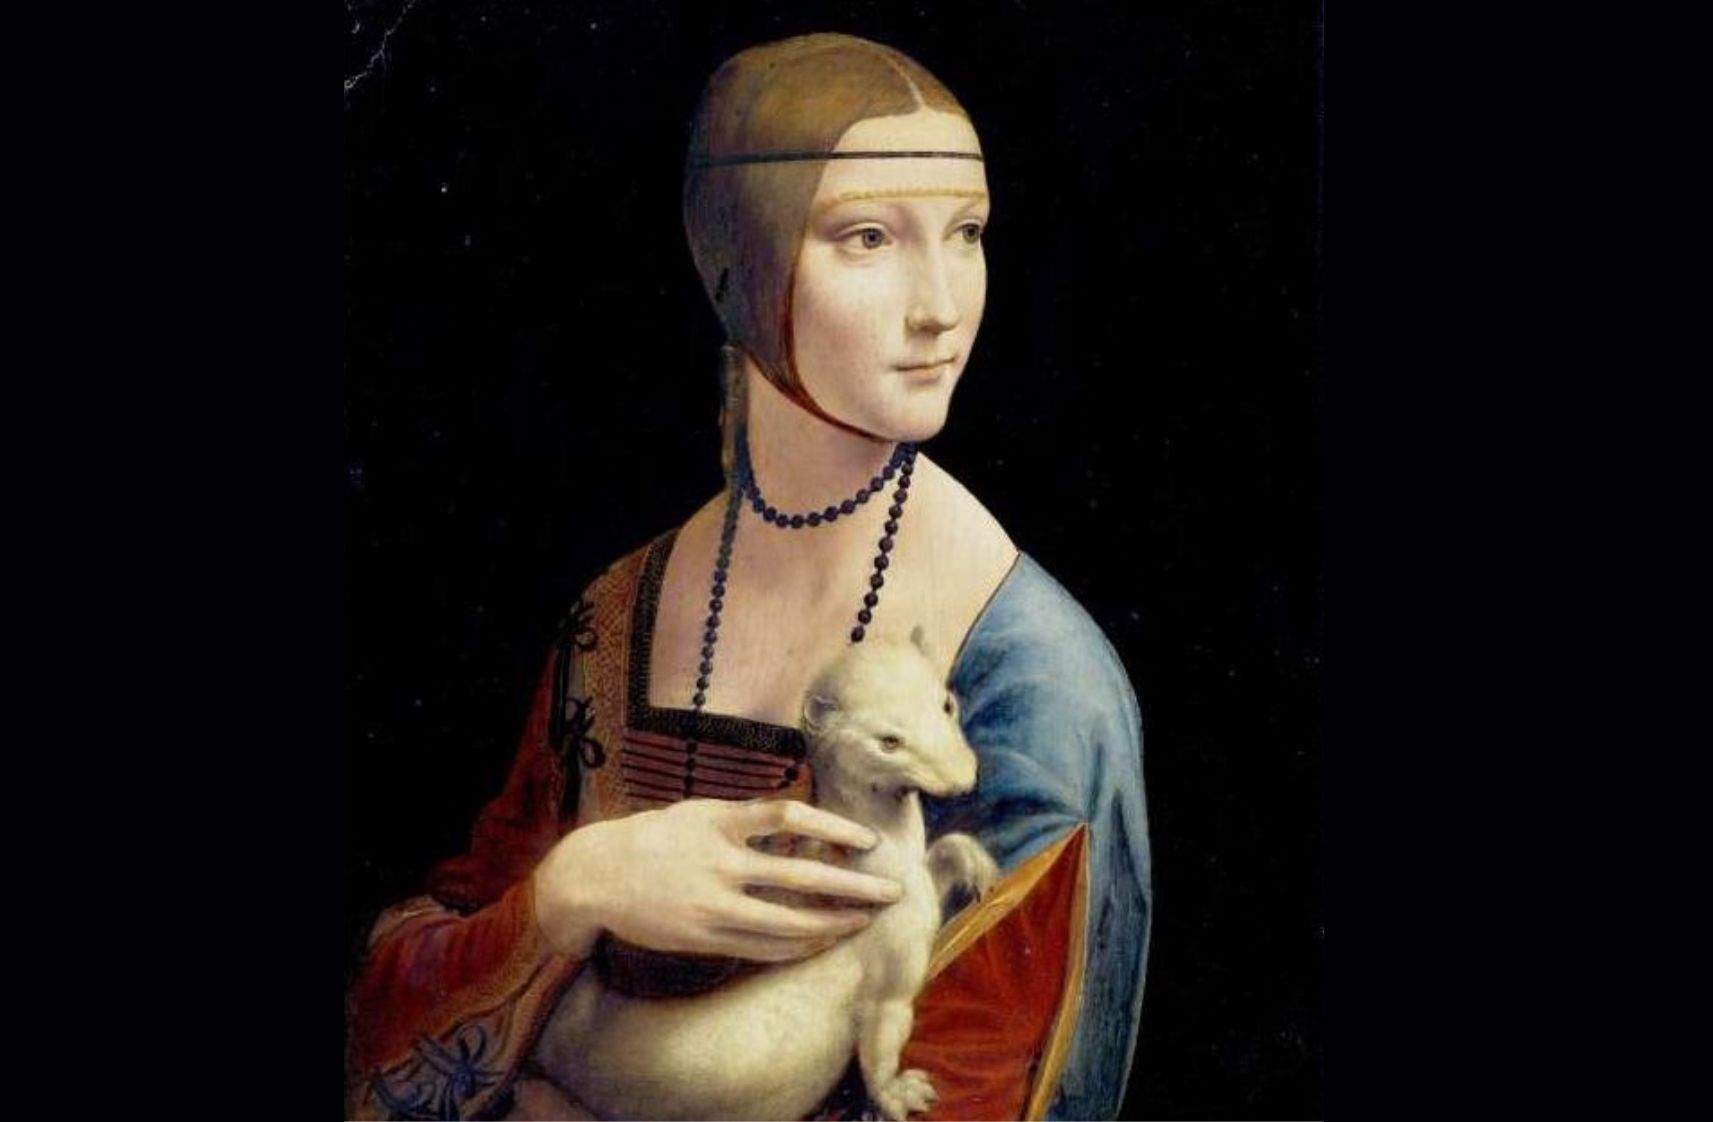 Leonardo da Vinci's 'The Lady with an Ermine